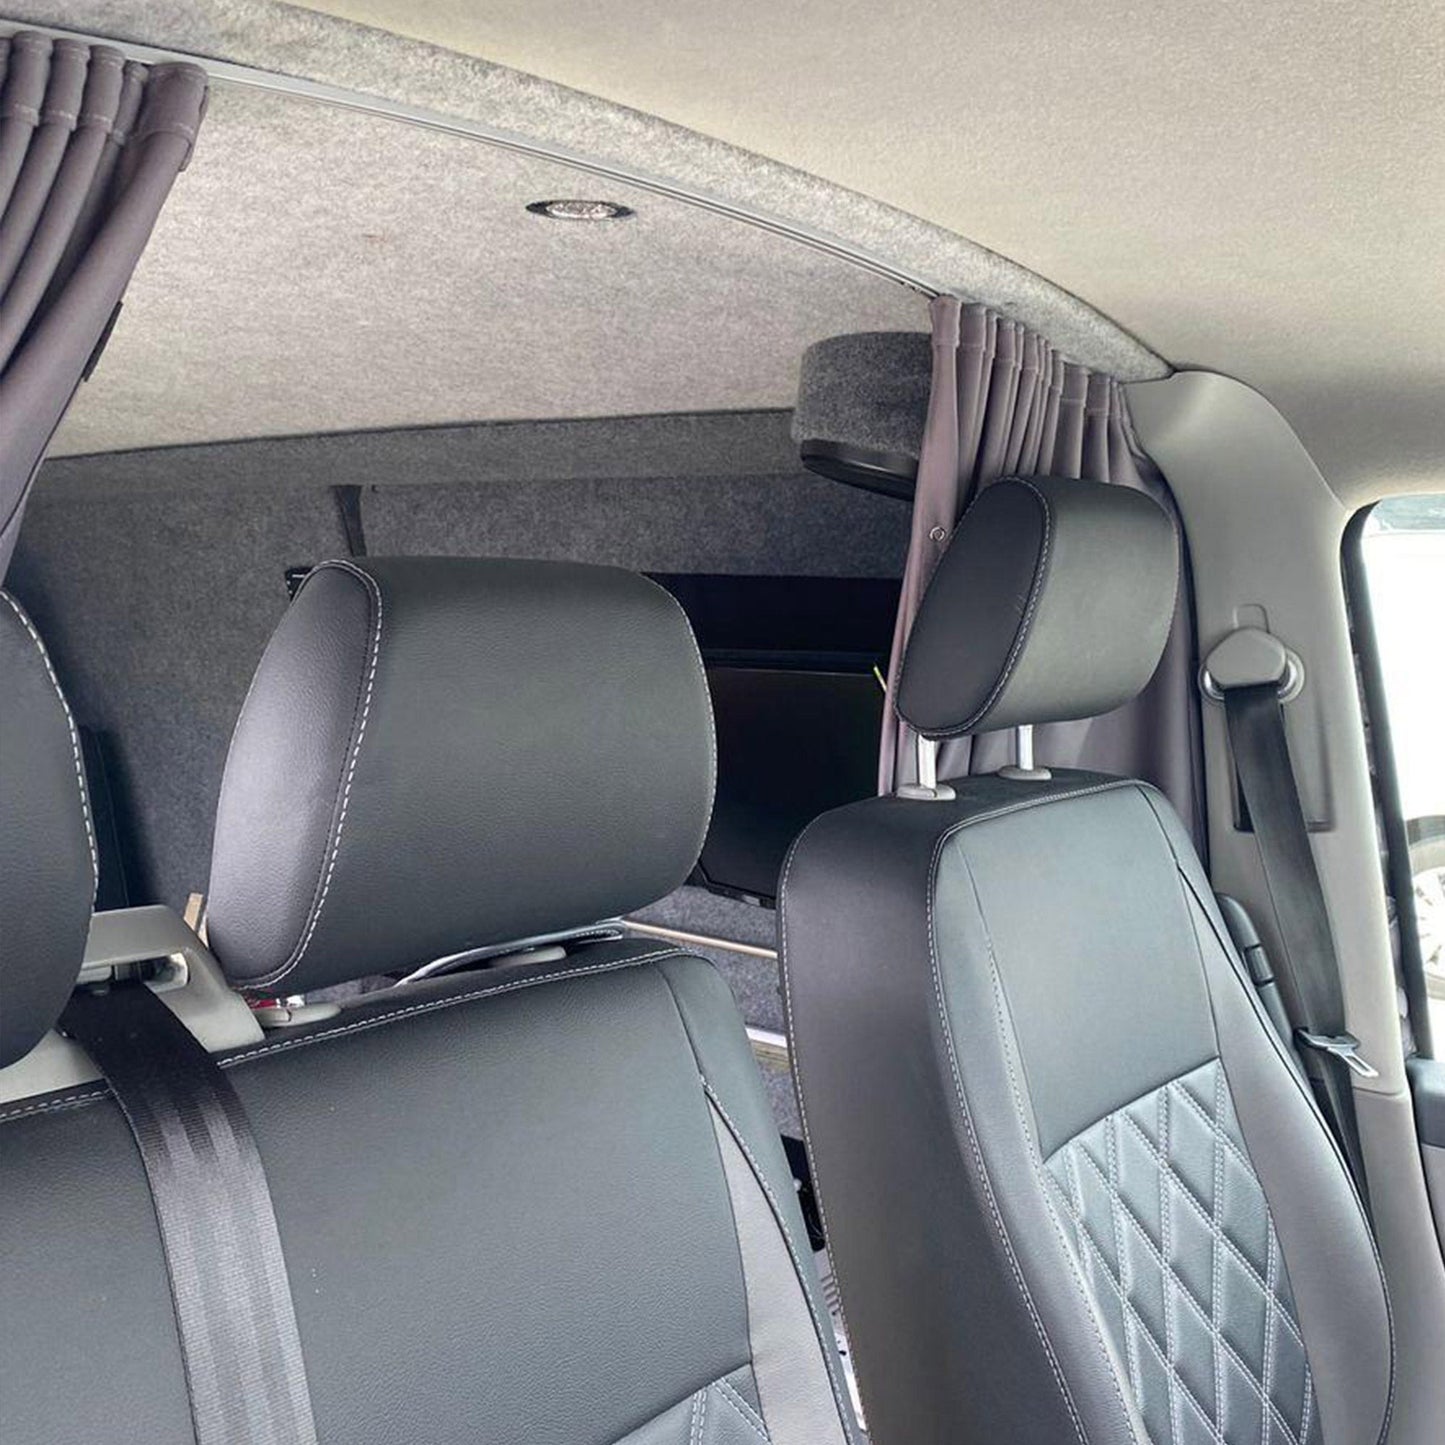 VW Caddy Cab Divider Curtain Kit